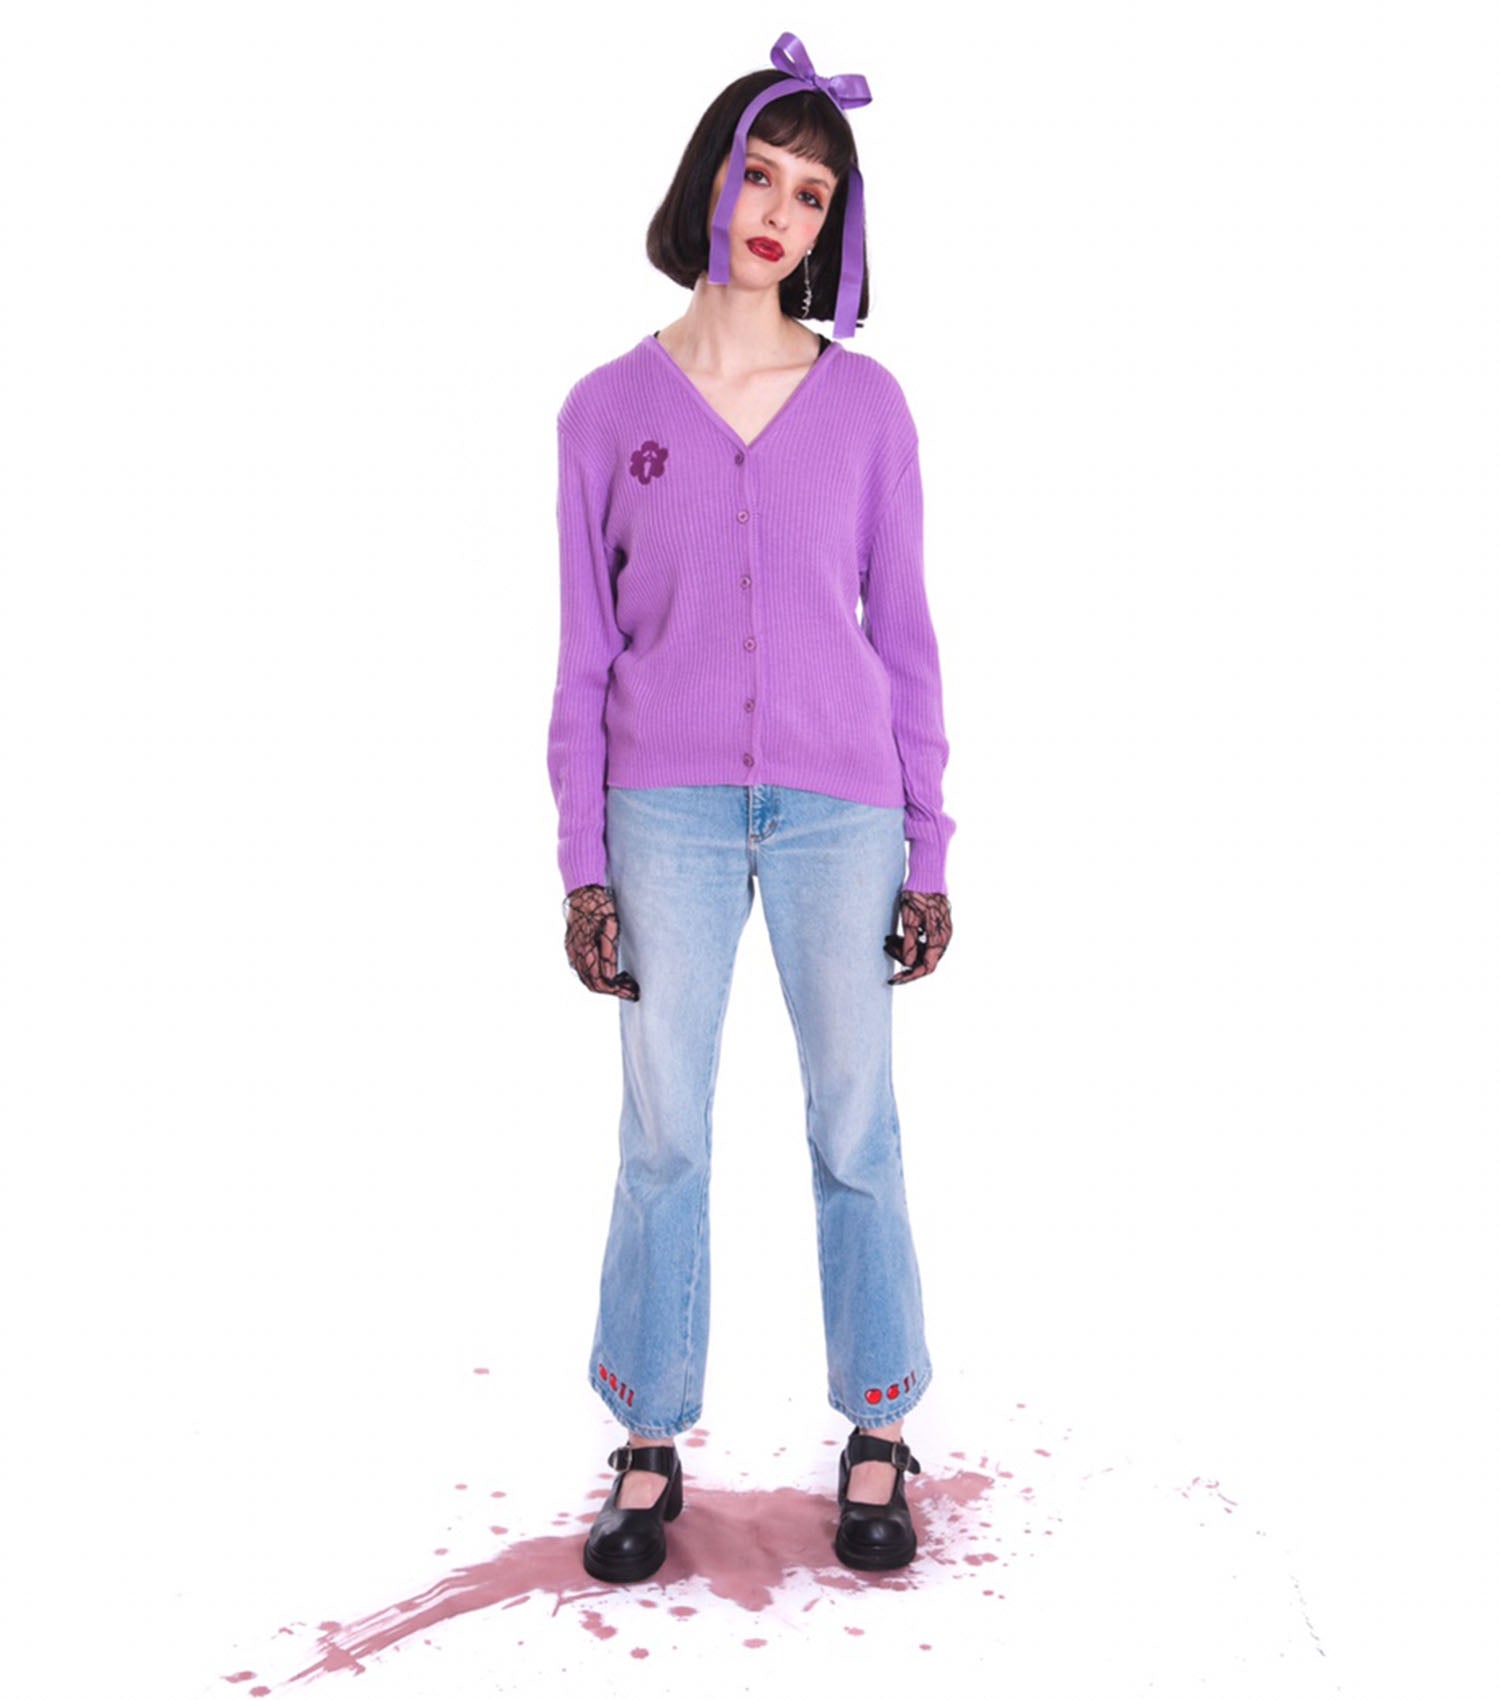 Bodega Slasher, cici Cooper, scream, 1997, y2k, ghostface, purple, lilac, top, sweater, cardigan, knitted, knitted cardigan, knit, made in Mexico, Mexico, Los Angeles, Kathleen 